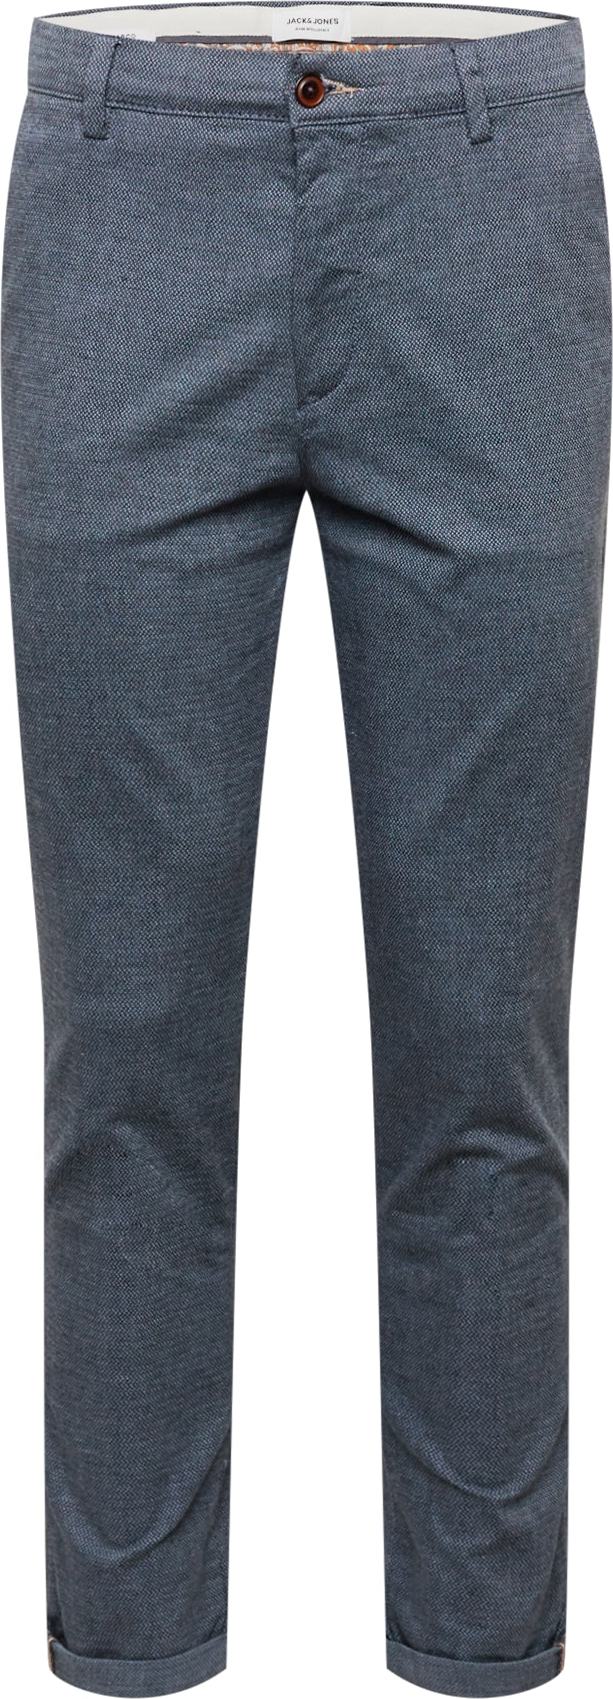 Chino kalhoty 'Marco' jack & jones chladná modrá / okrová